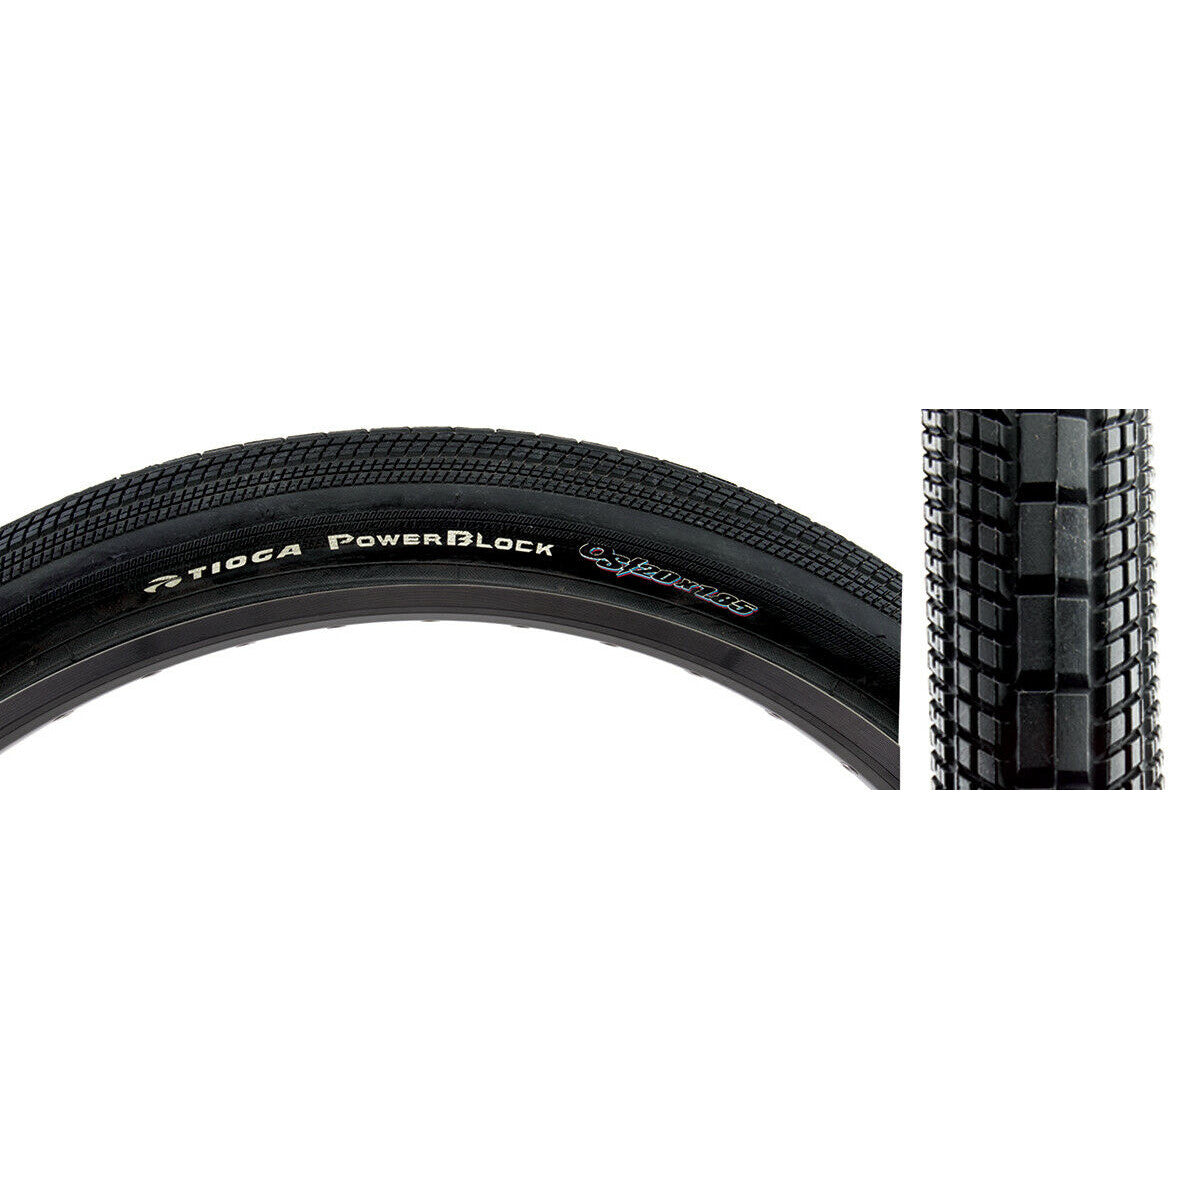 20x1.85 OS-20 (451mm) Tioga Power Block (PowerBlock) BMX tire - Black